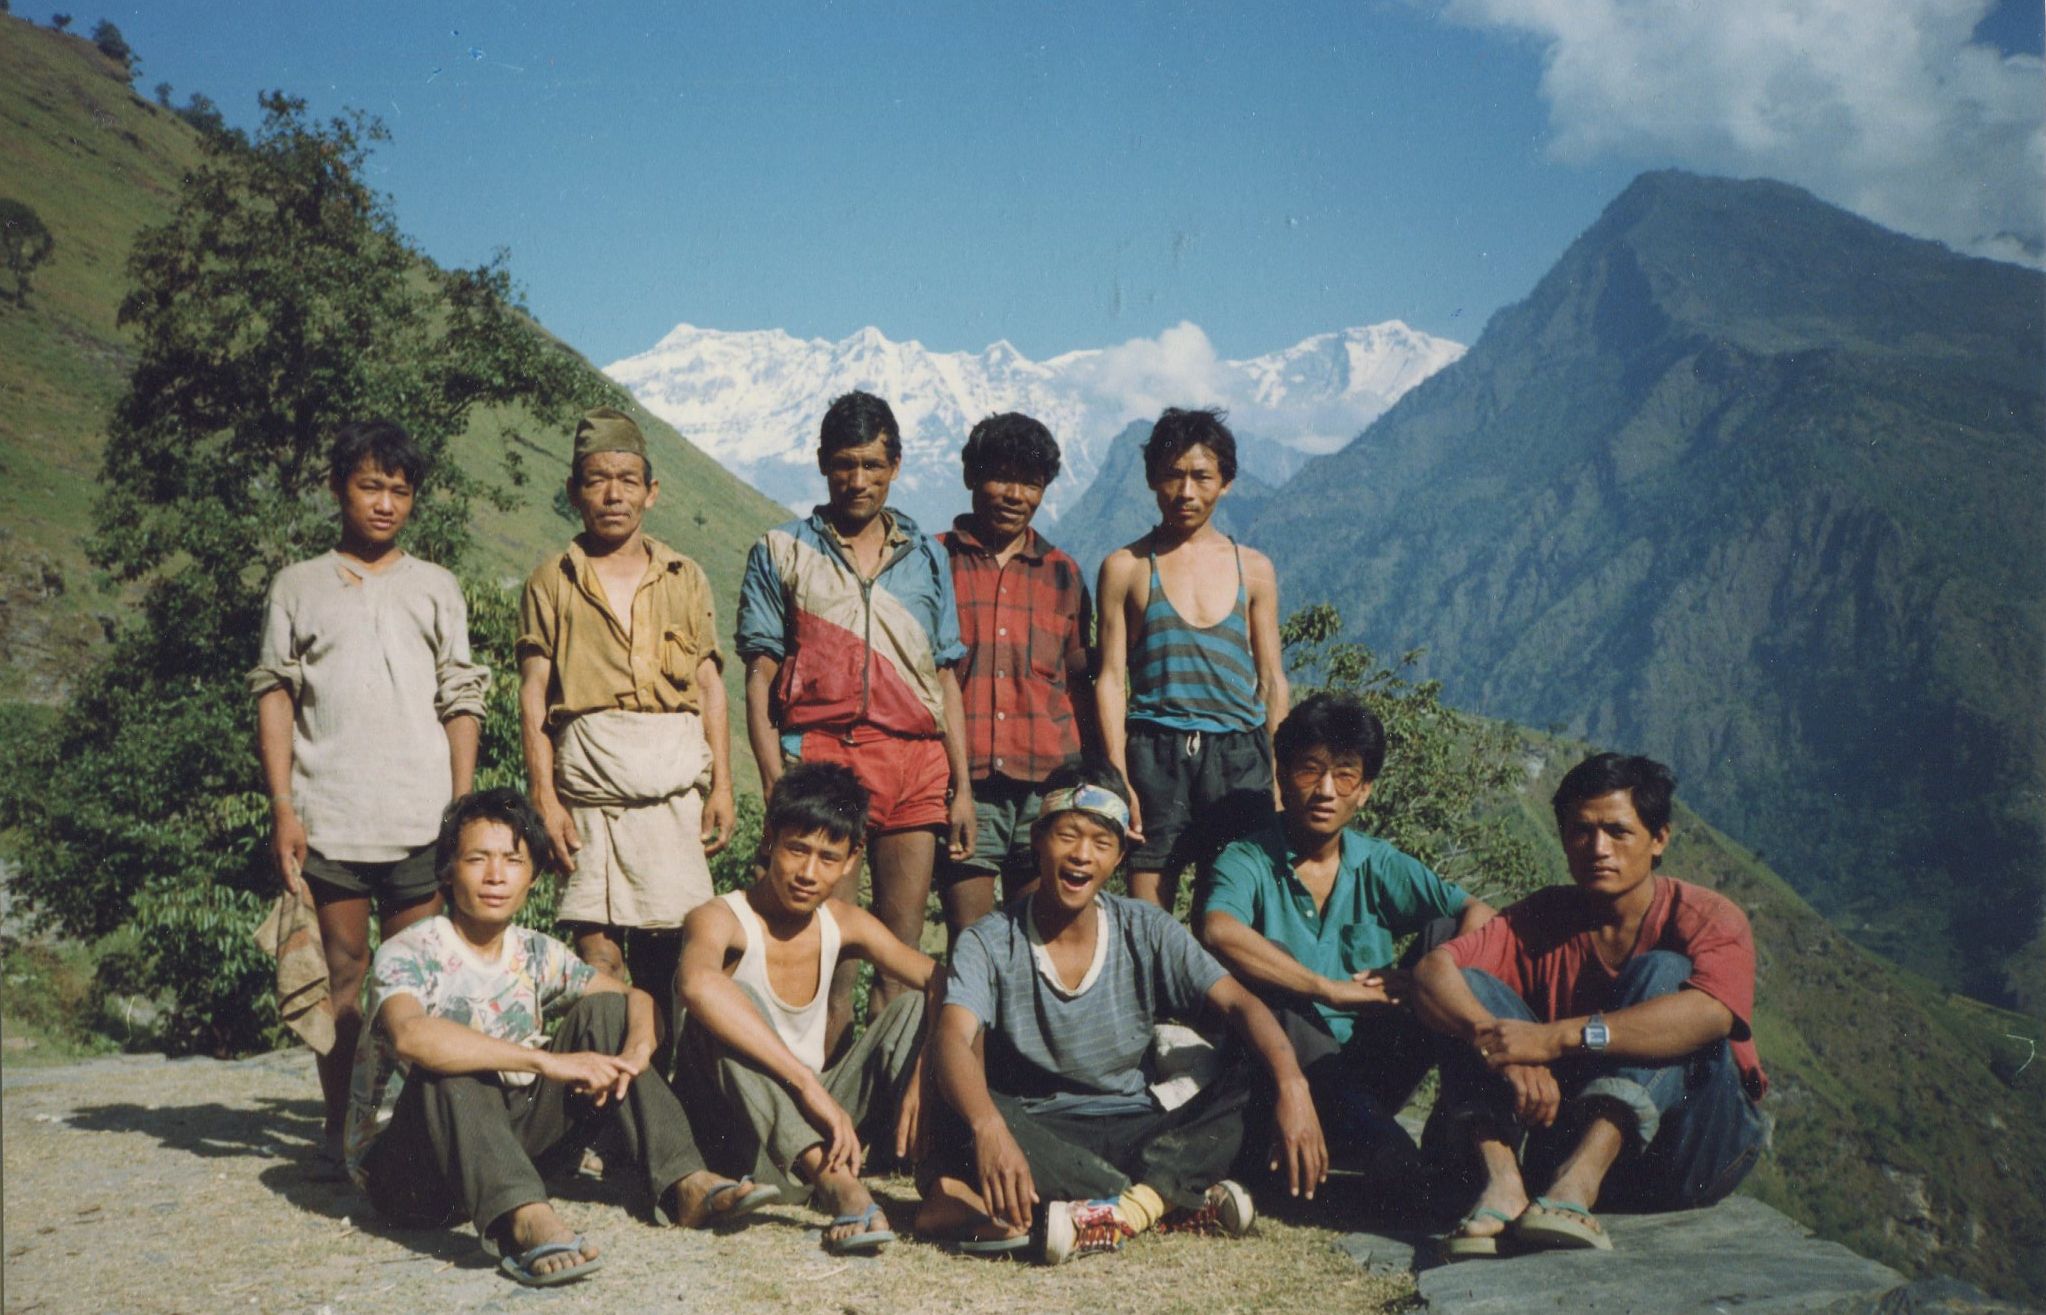 Trekking Crew and the Gurja Himal